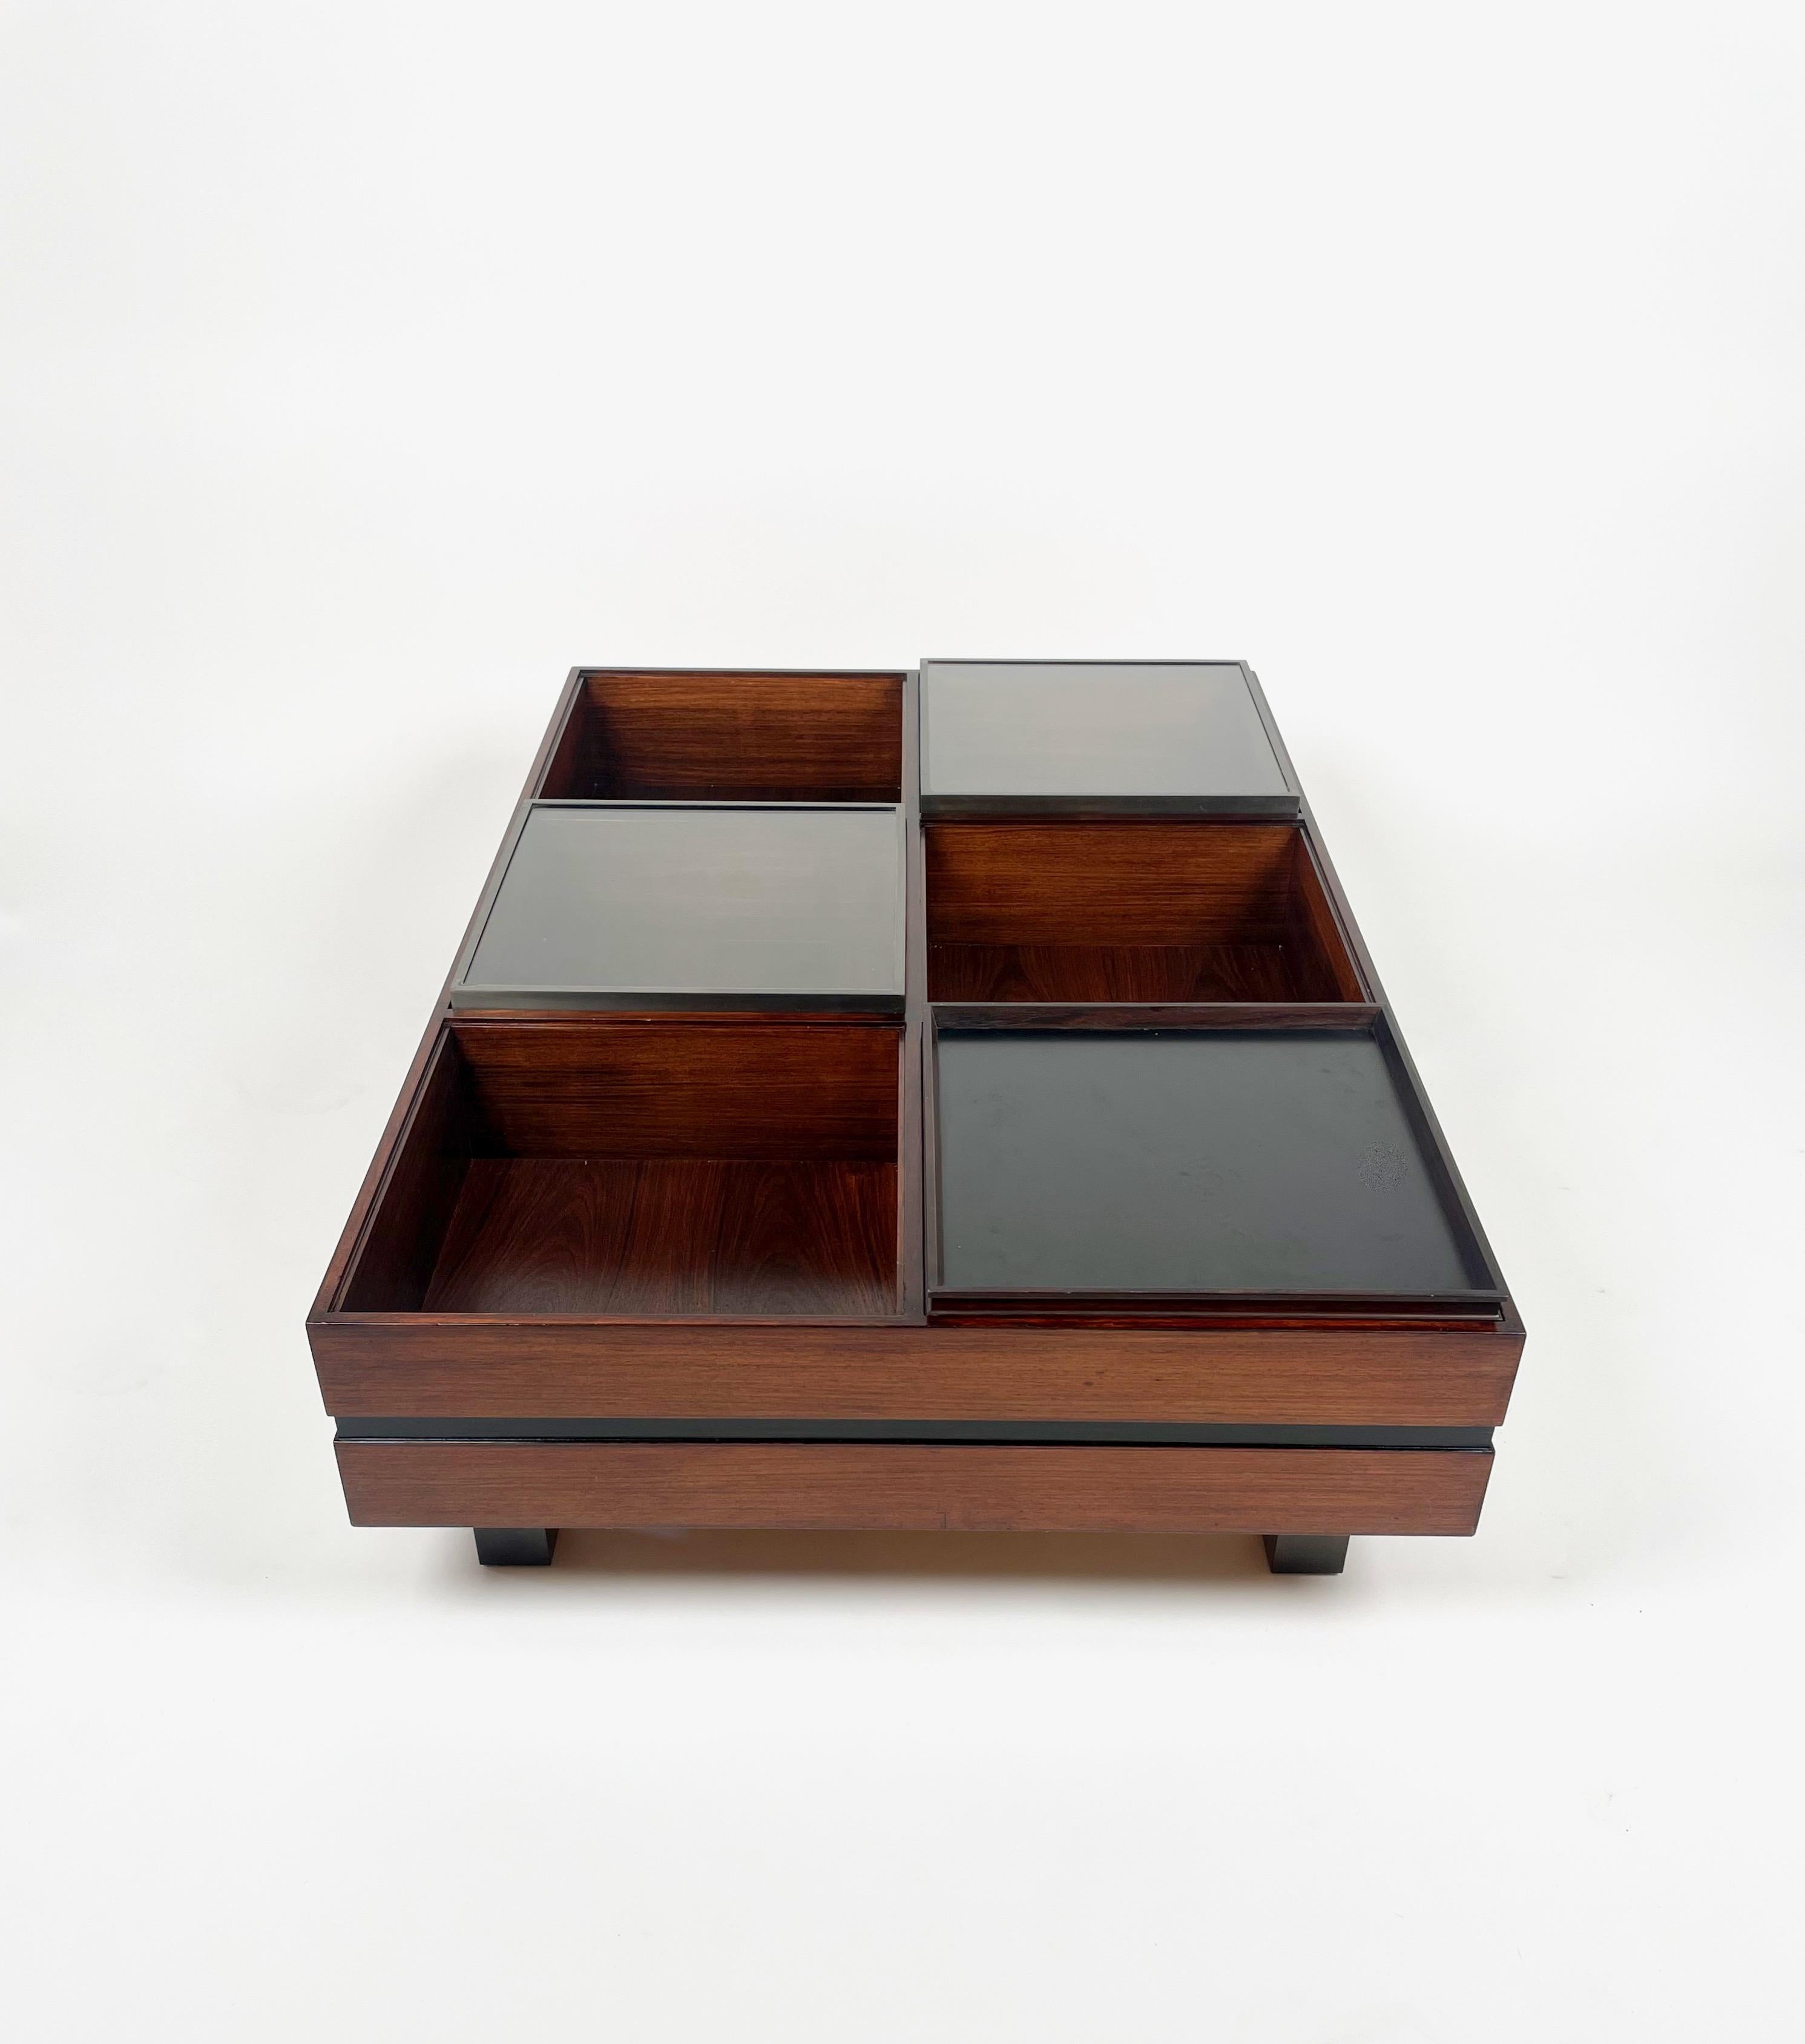 Luigi Sormani Rectangular Modular Coffee Table in Wood and Glass, Italy, 1960s For Sale 4